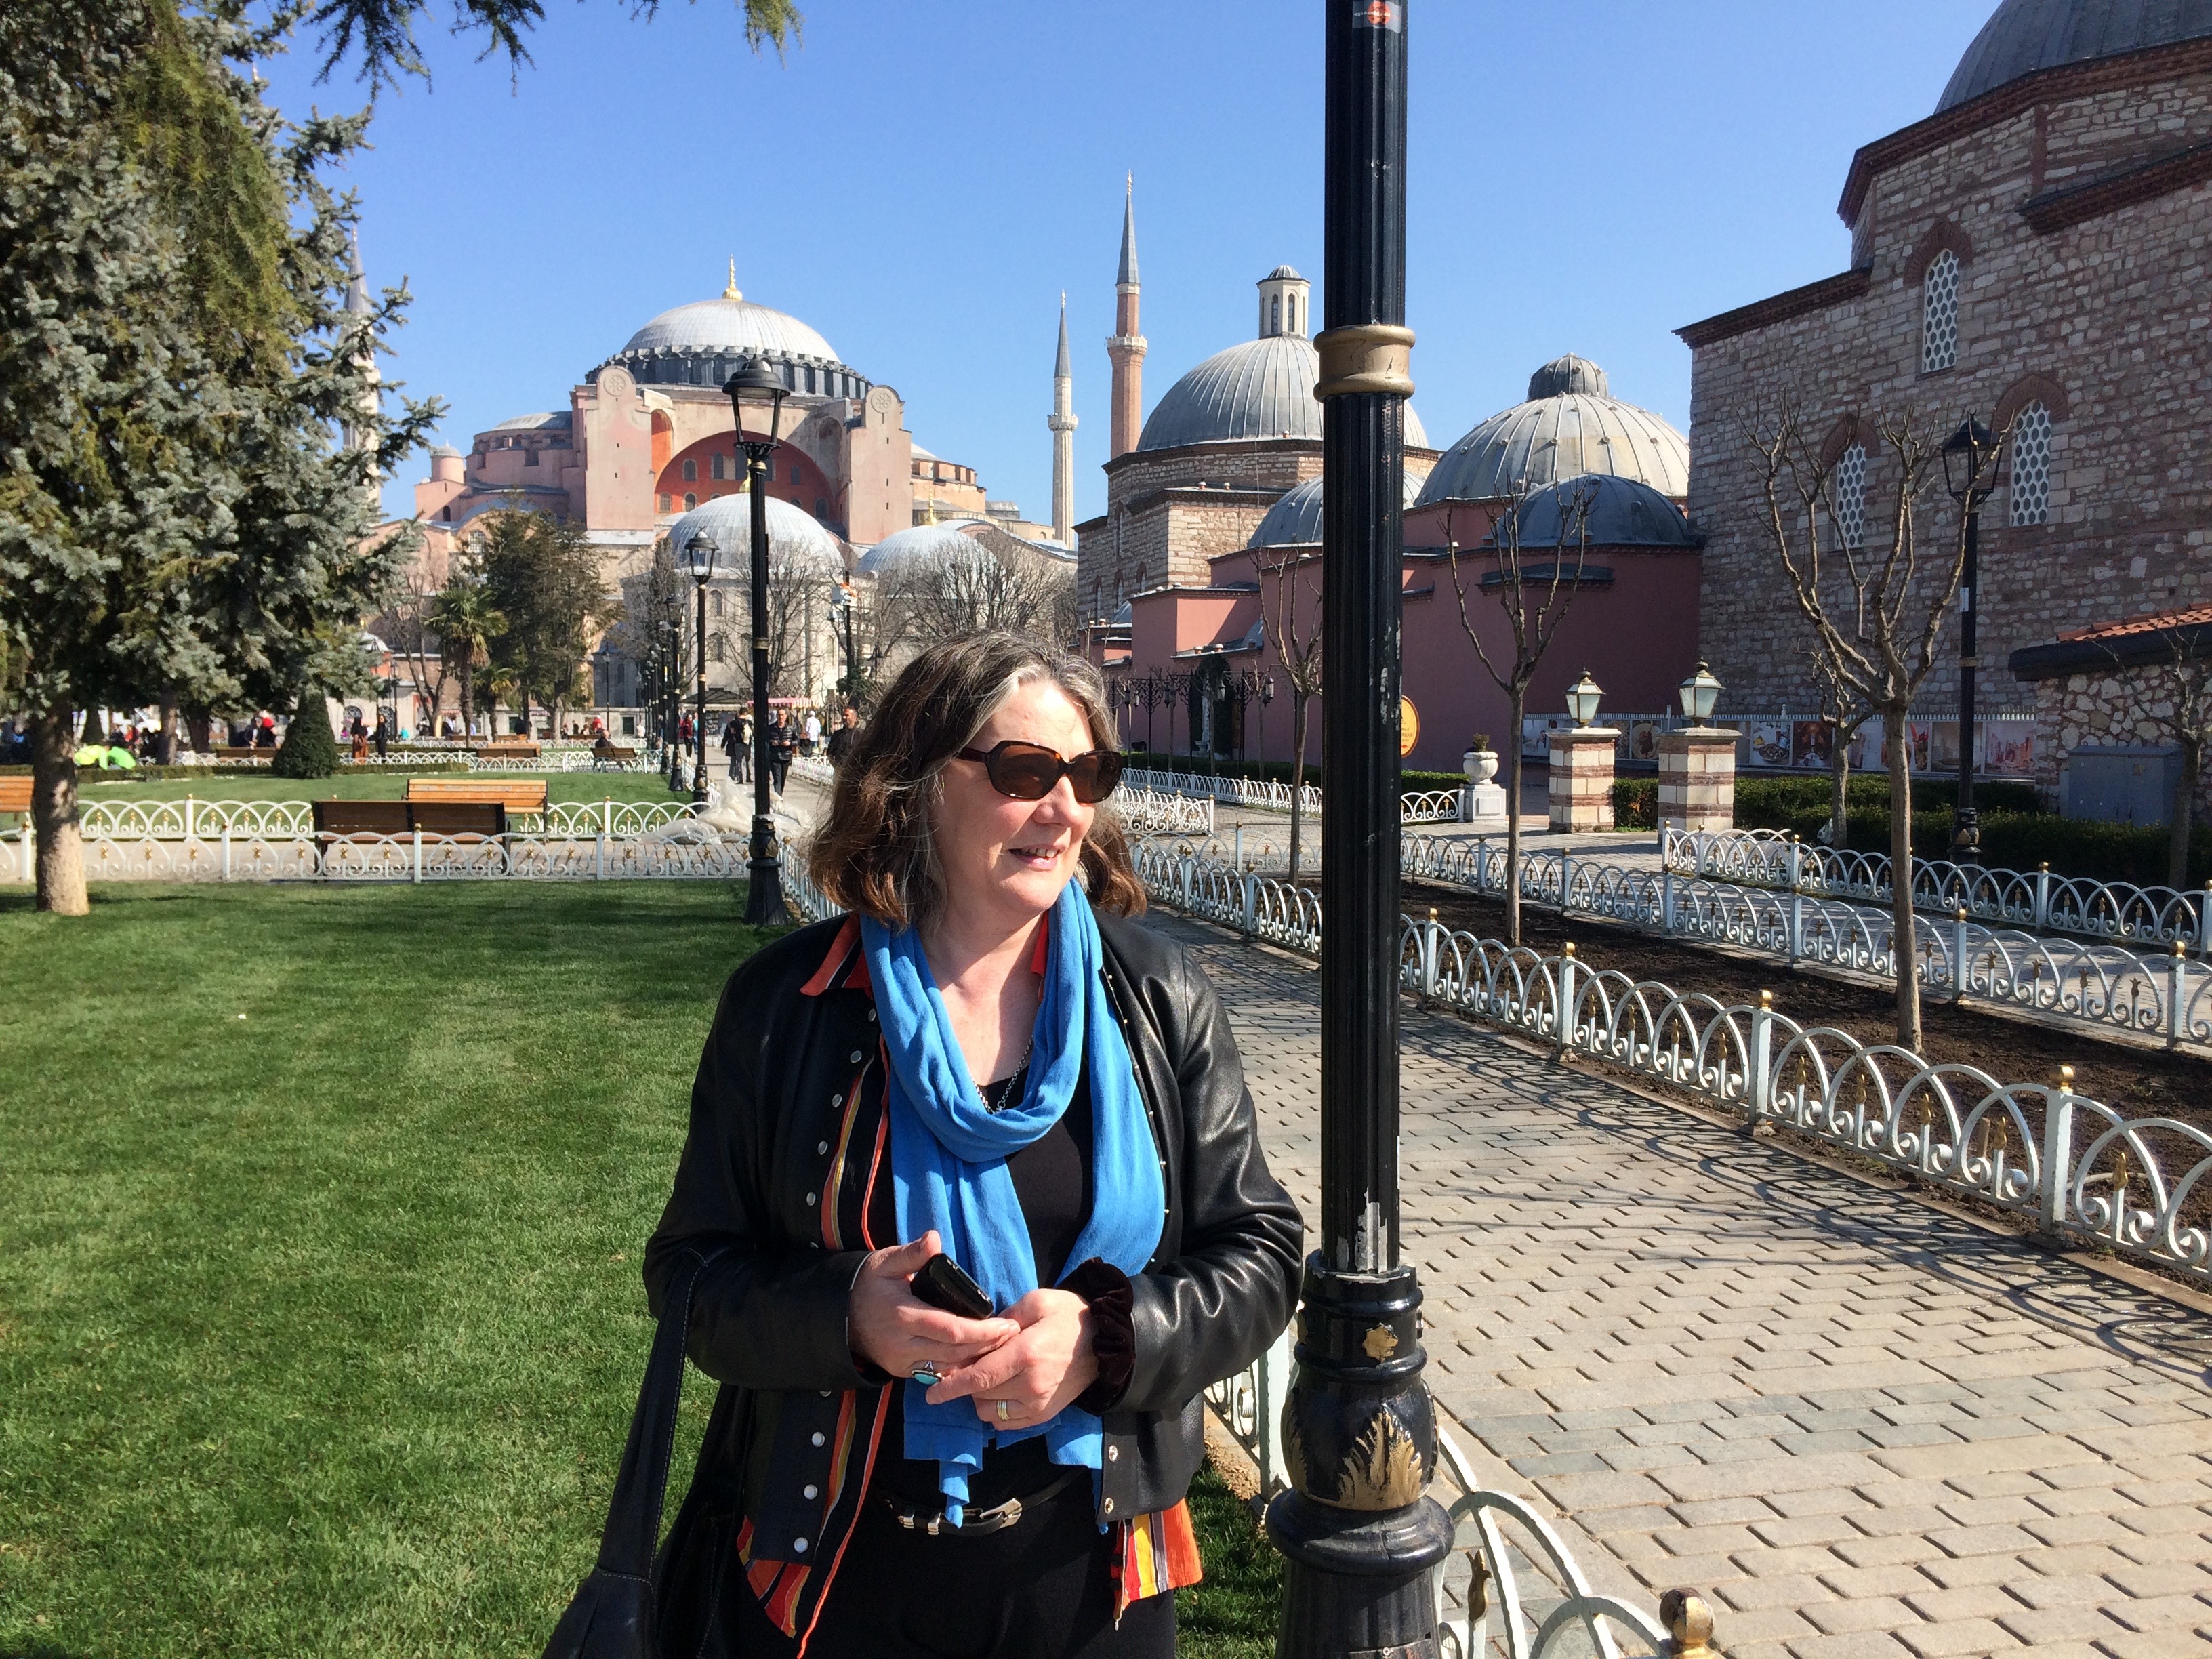 2017 - March, Hagia Sophia, Istanbul